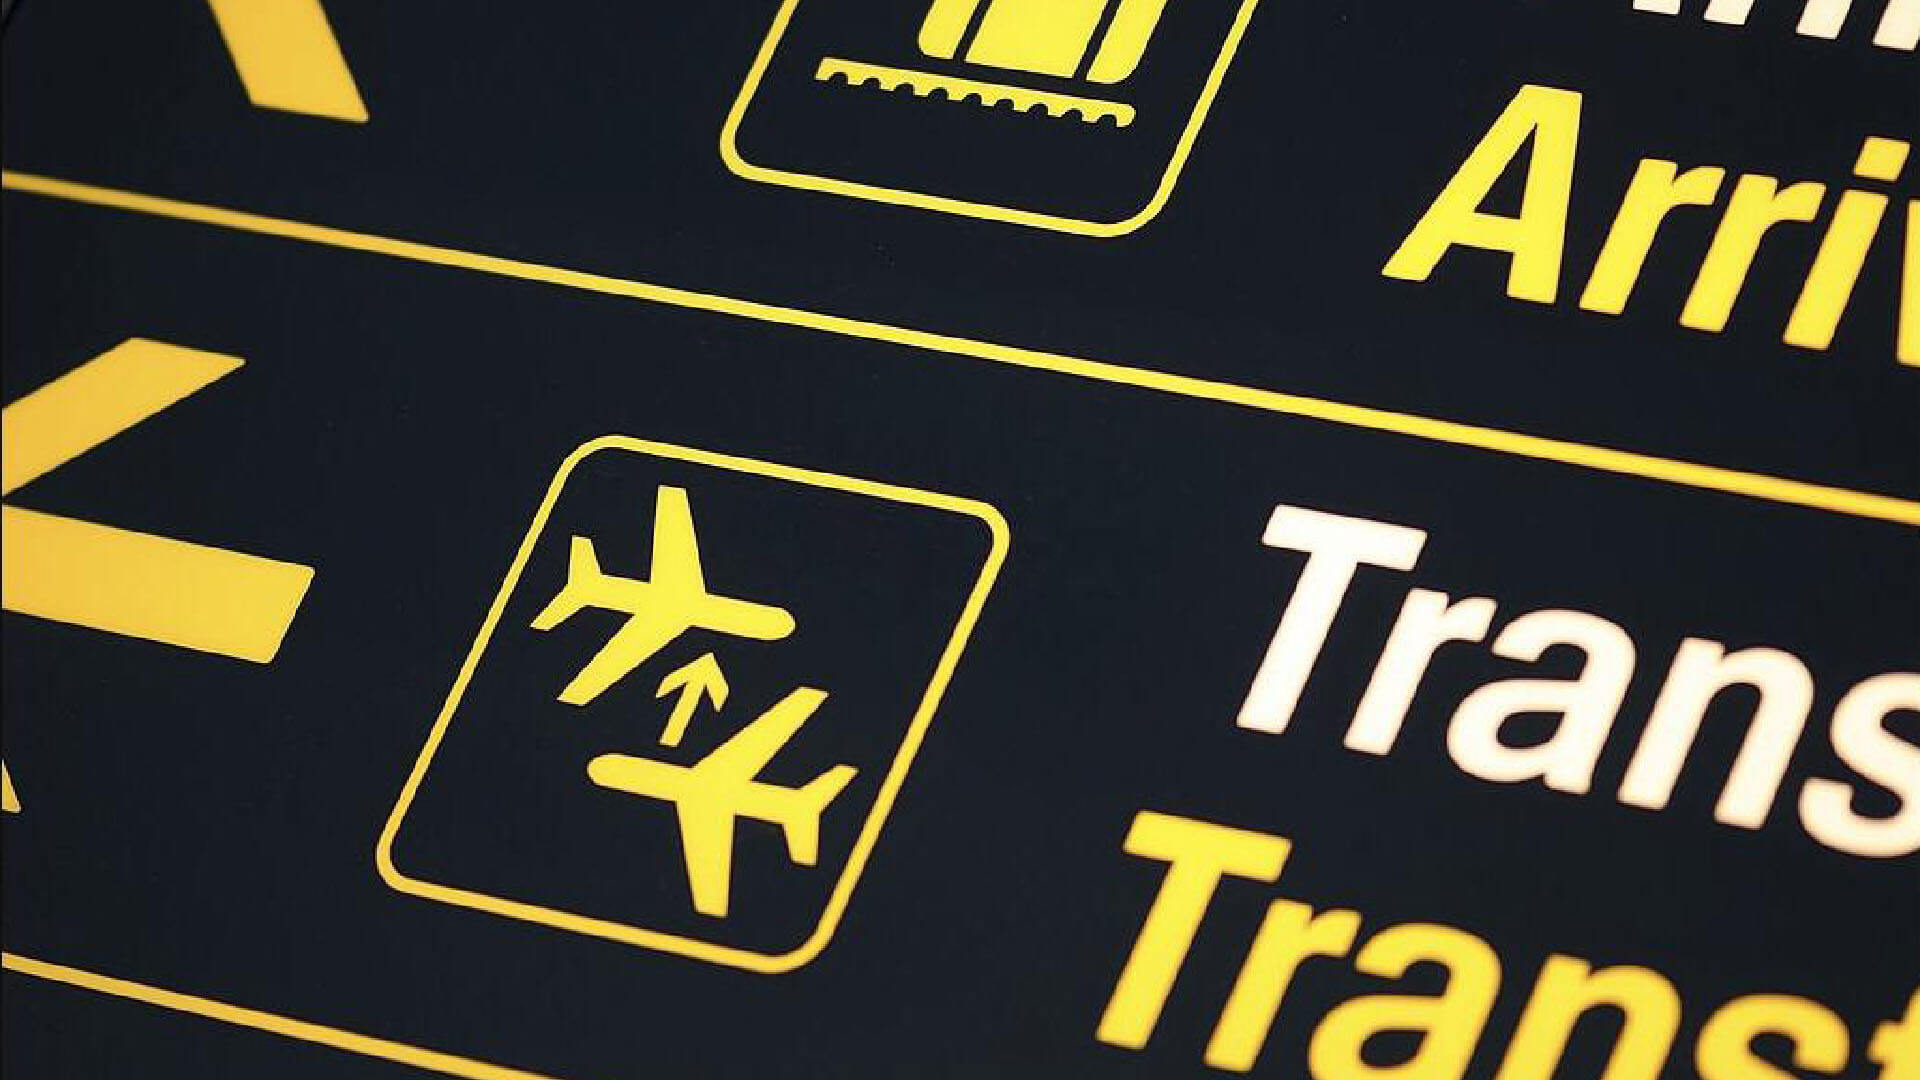 Sabiha gokcen airport transfer header image